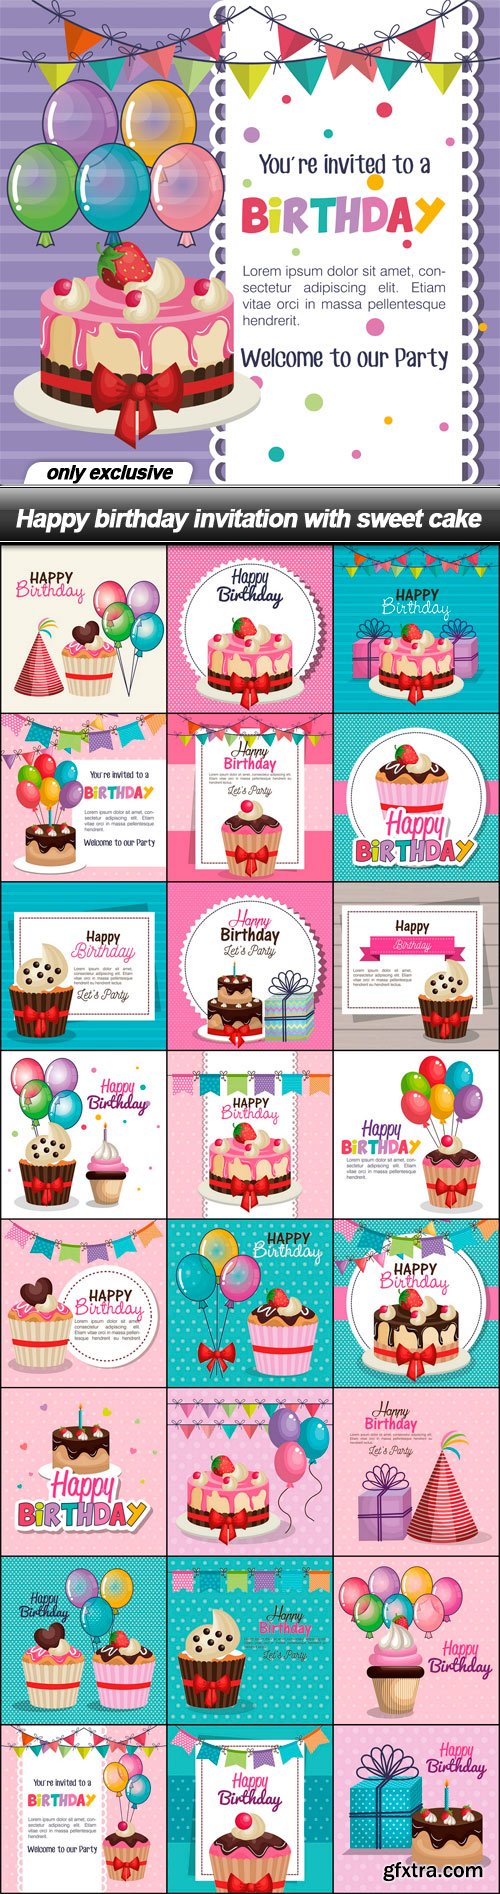 Happy birthday invitation with sweet cake - 25 EPS